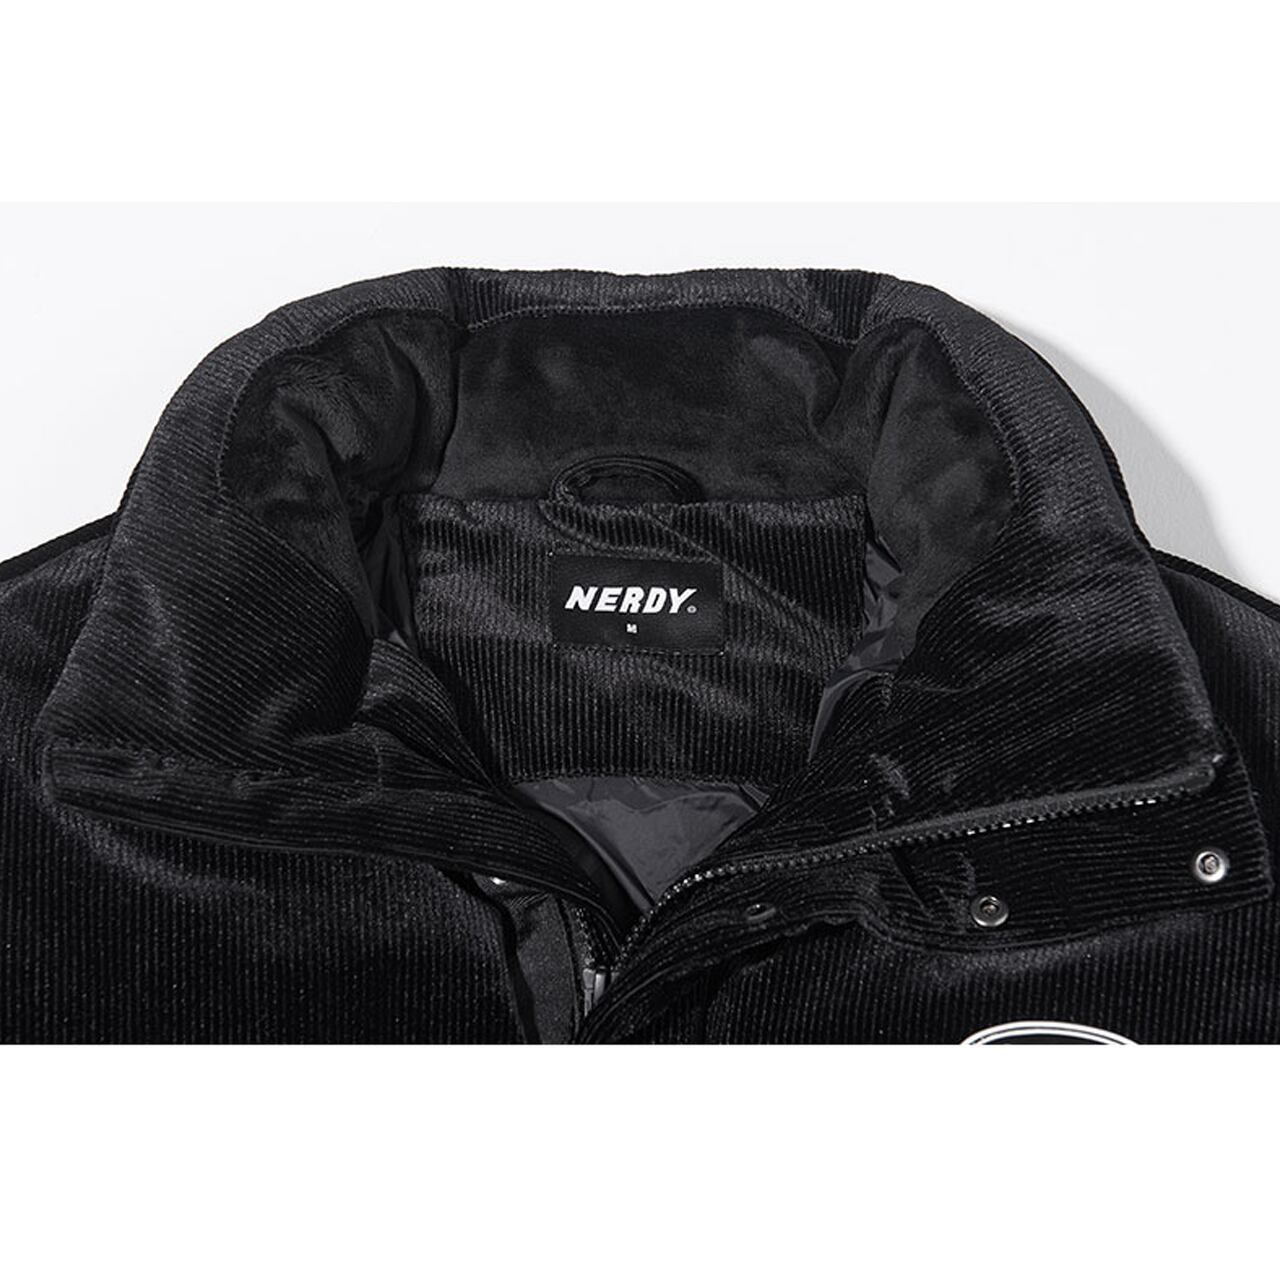 [NERDY] Corduroy Velvet Down Jacket Black 正規品 OUTER 韓国 ブランド ダウン ジャケット |  BONZ (韓国ブランド 代行) powered by BASE